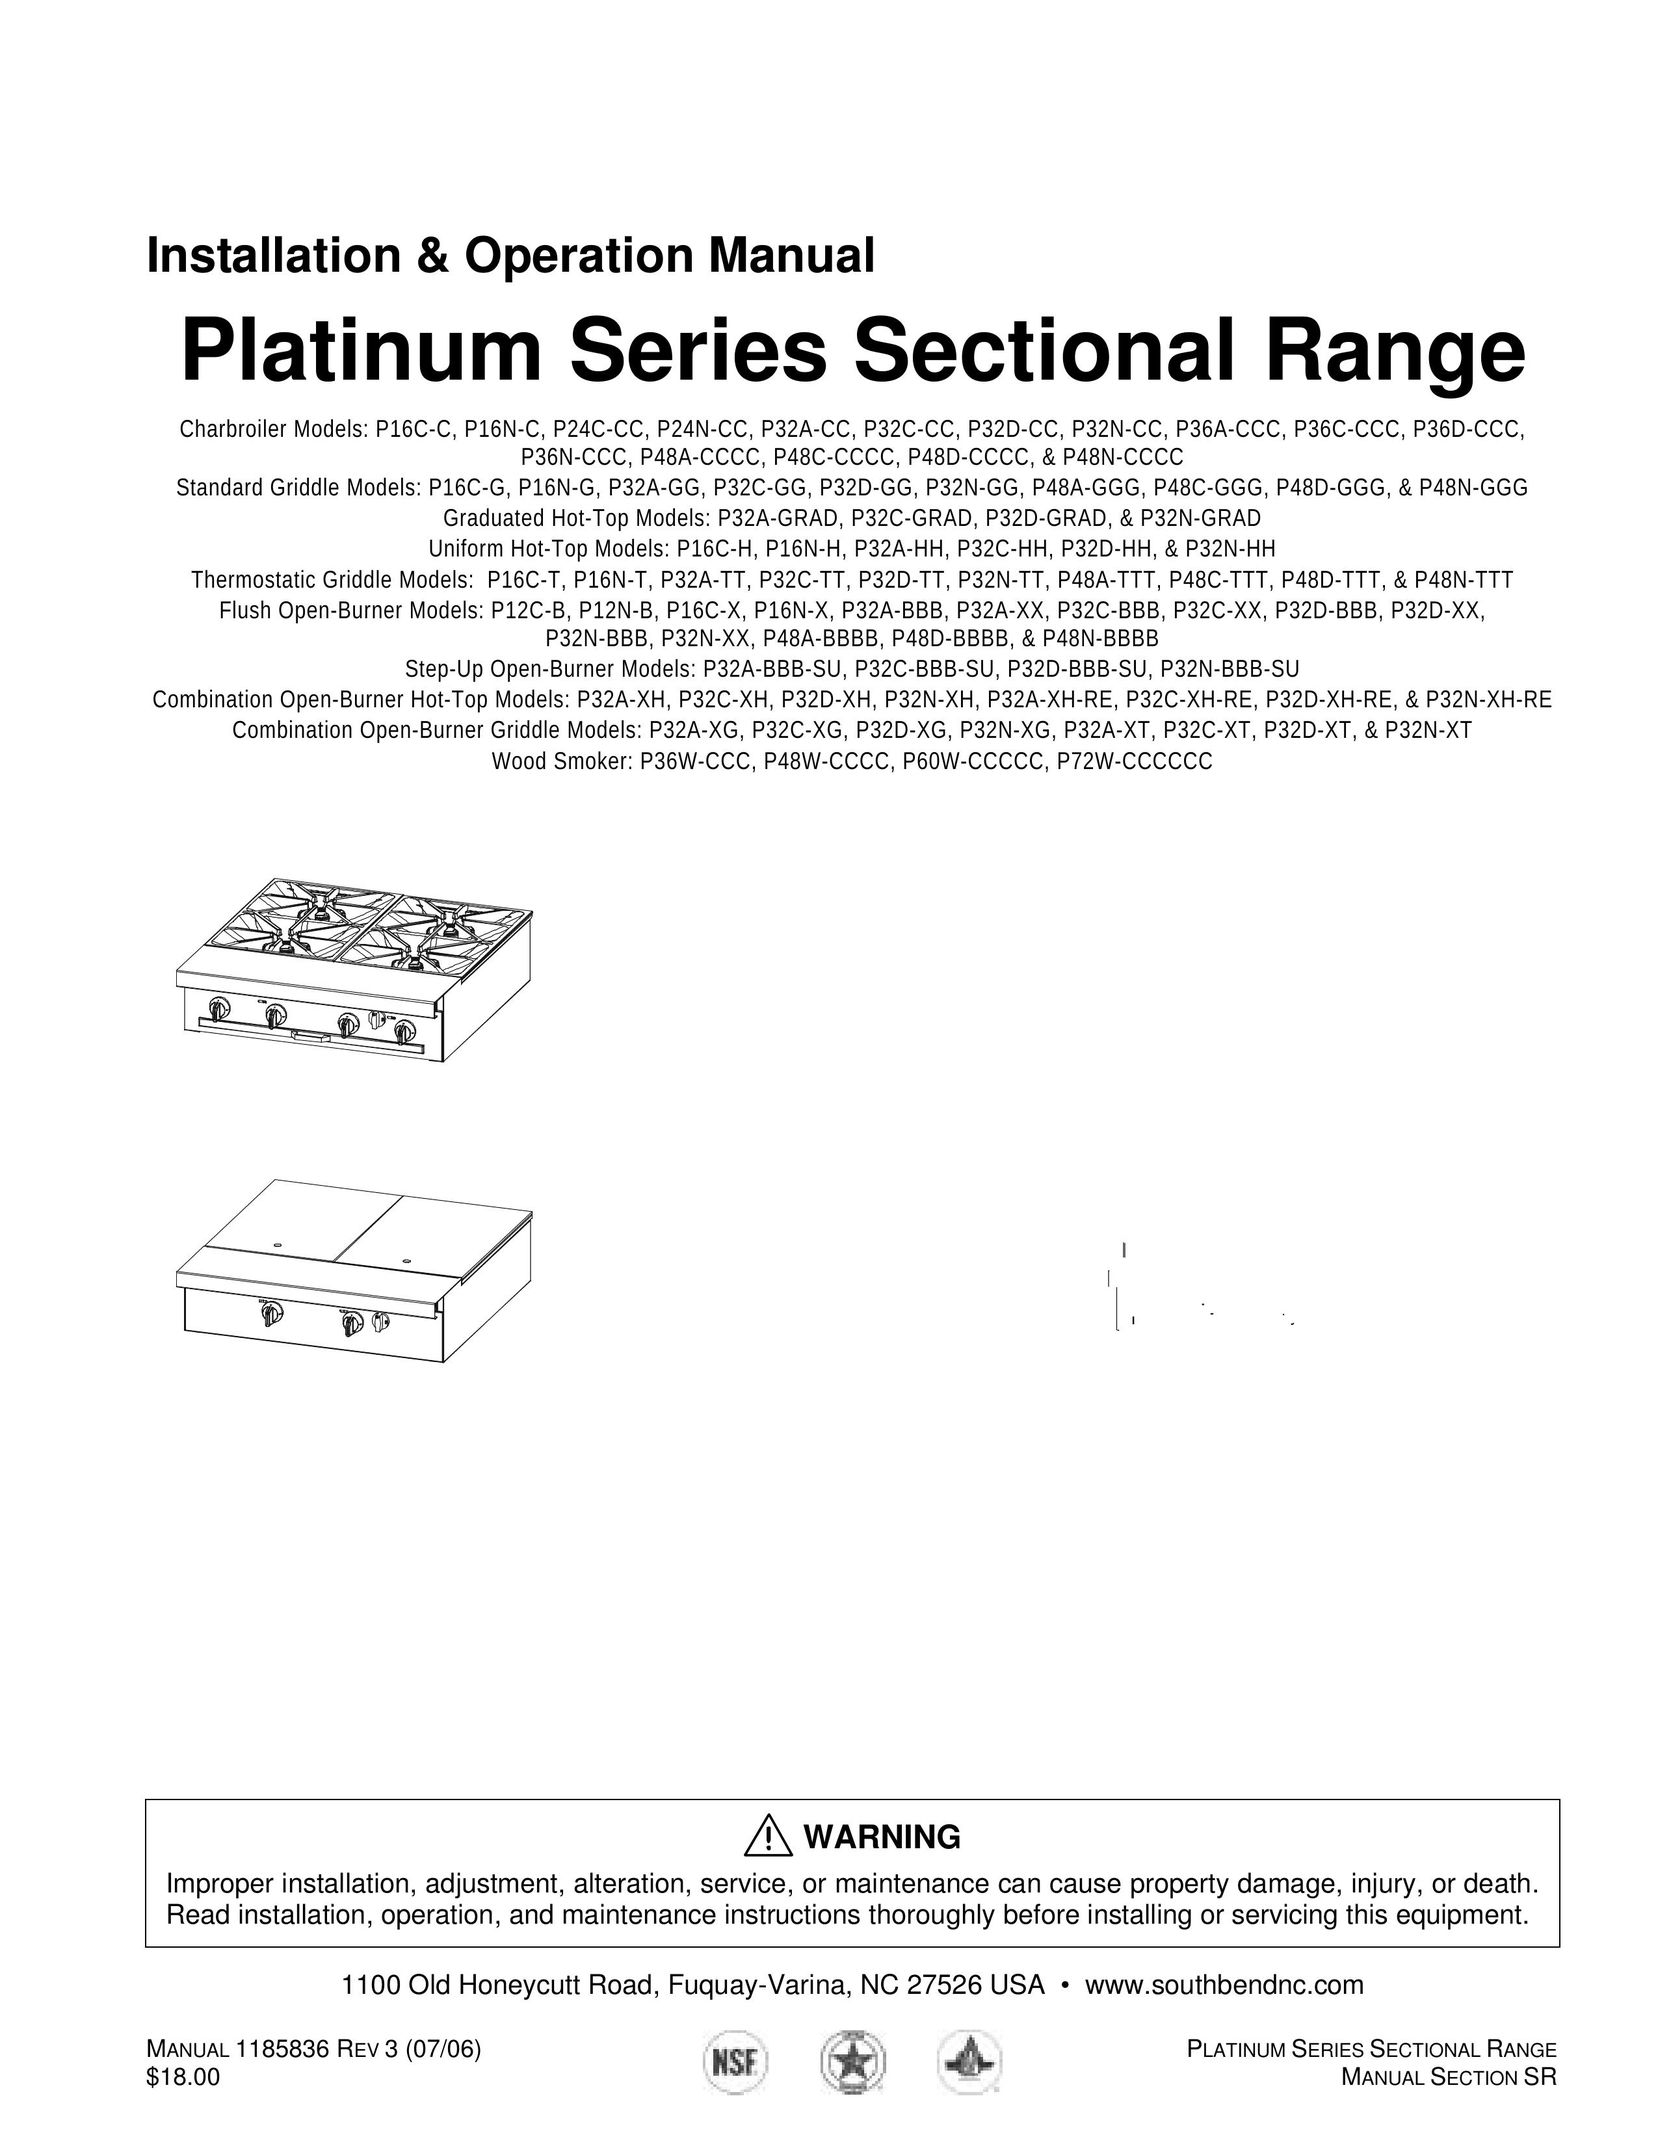 Southbend P12N-B Range User Manual